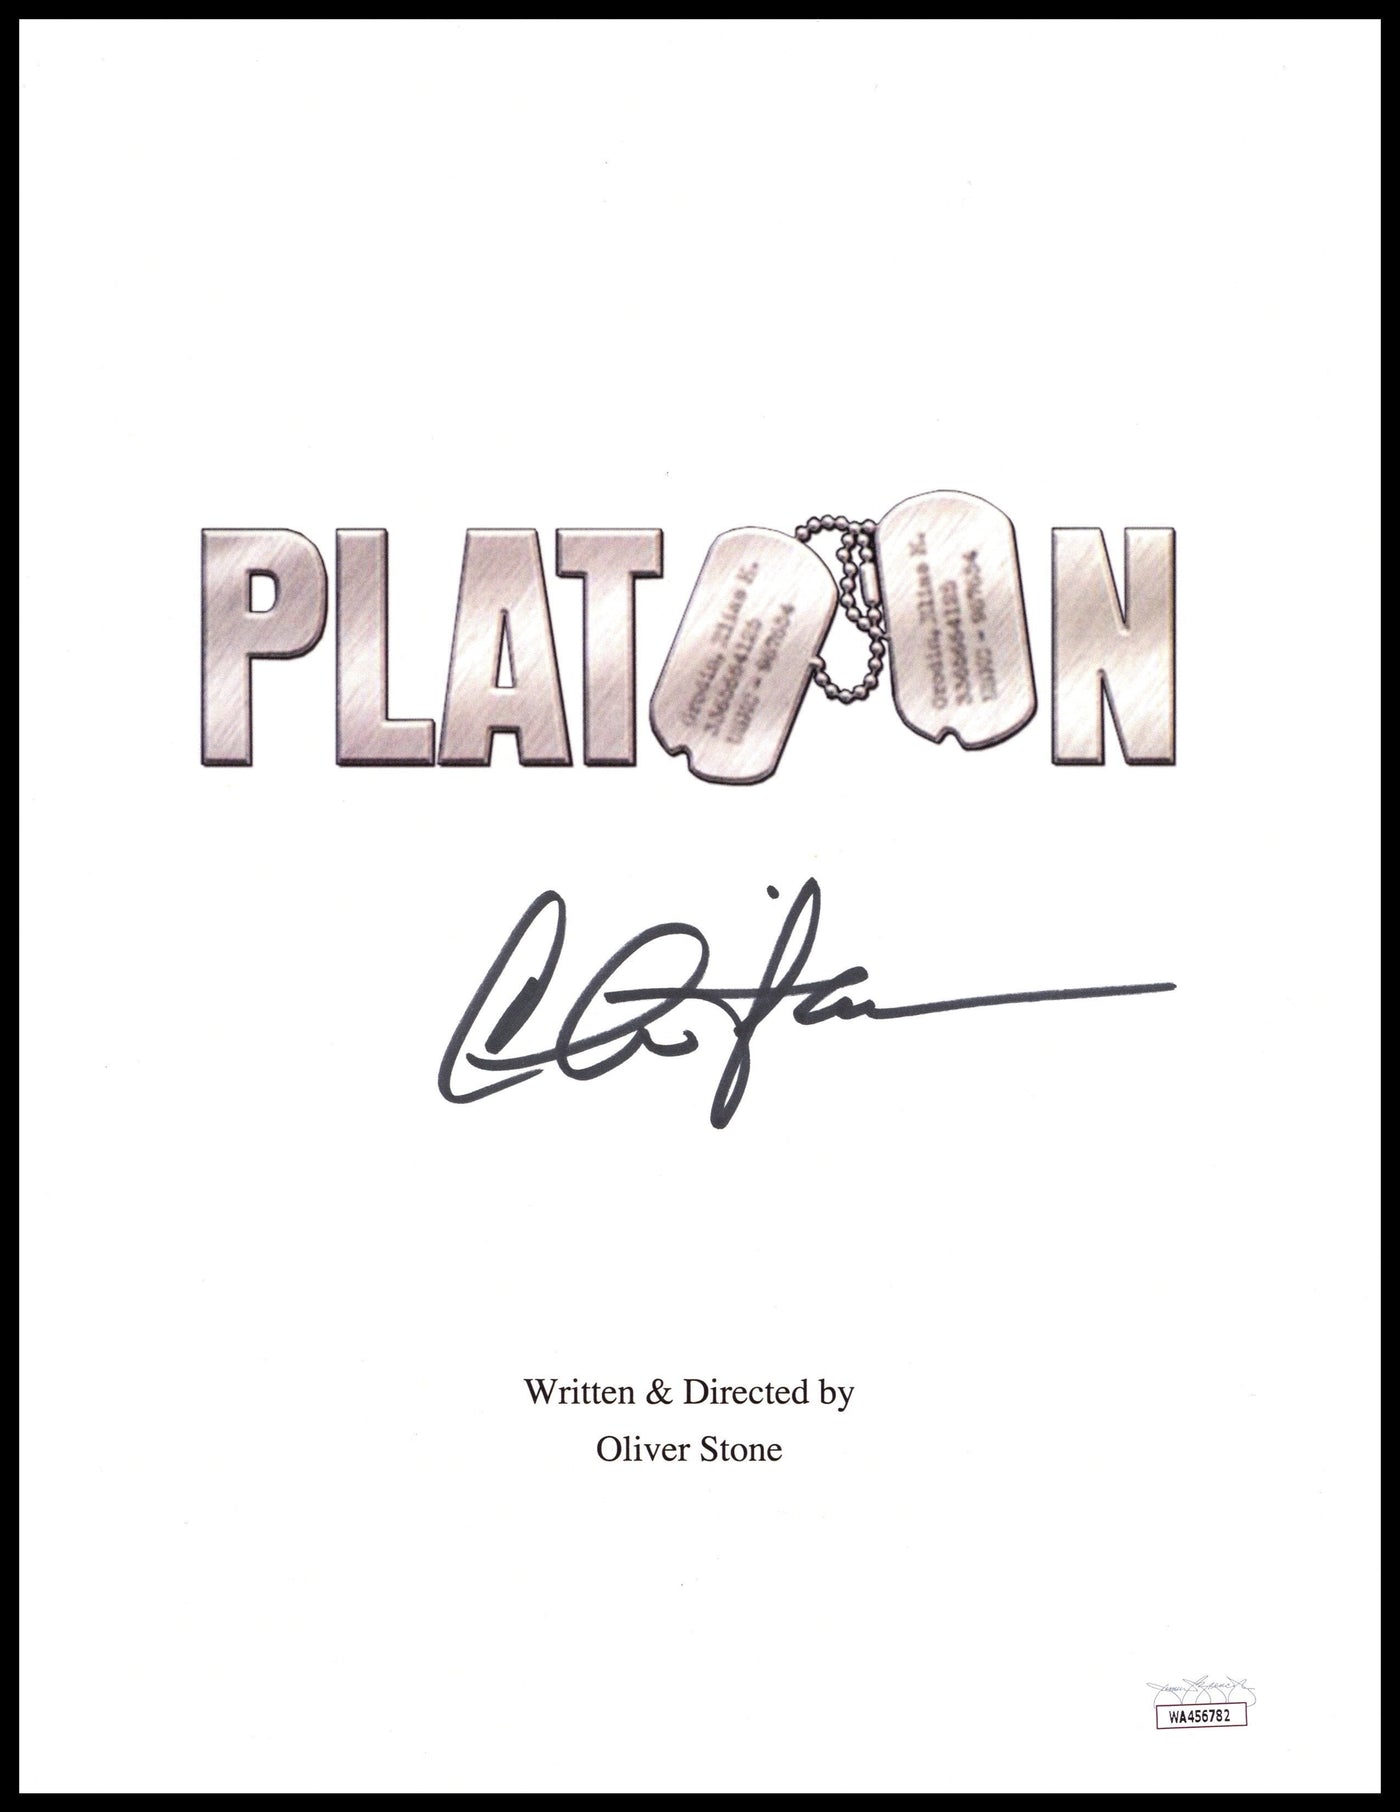 Charlie Sheen Signed Platoon Movie Script Cover Autographed JSA COA